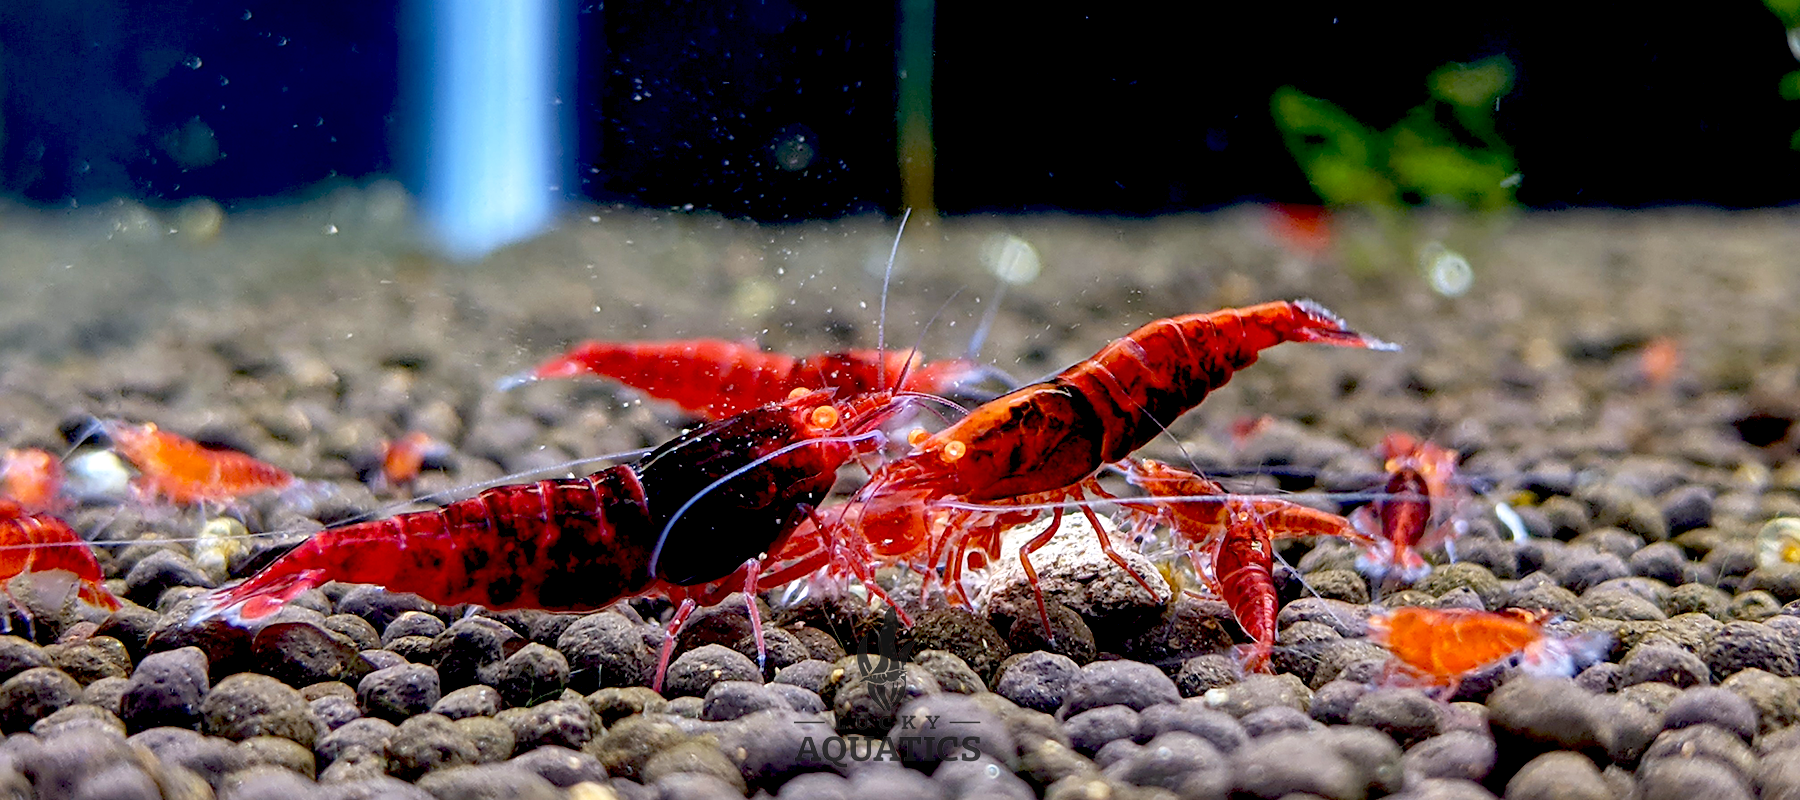 How To Feed Your Aquarium Shrimp 2.0